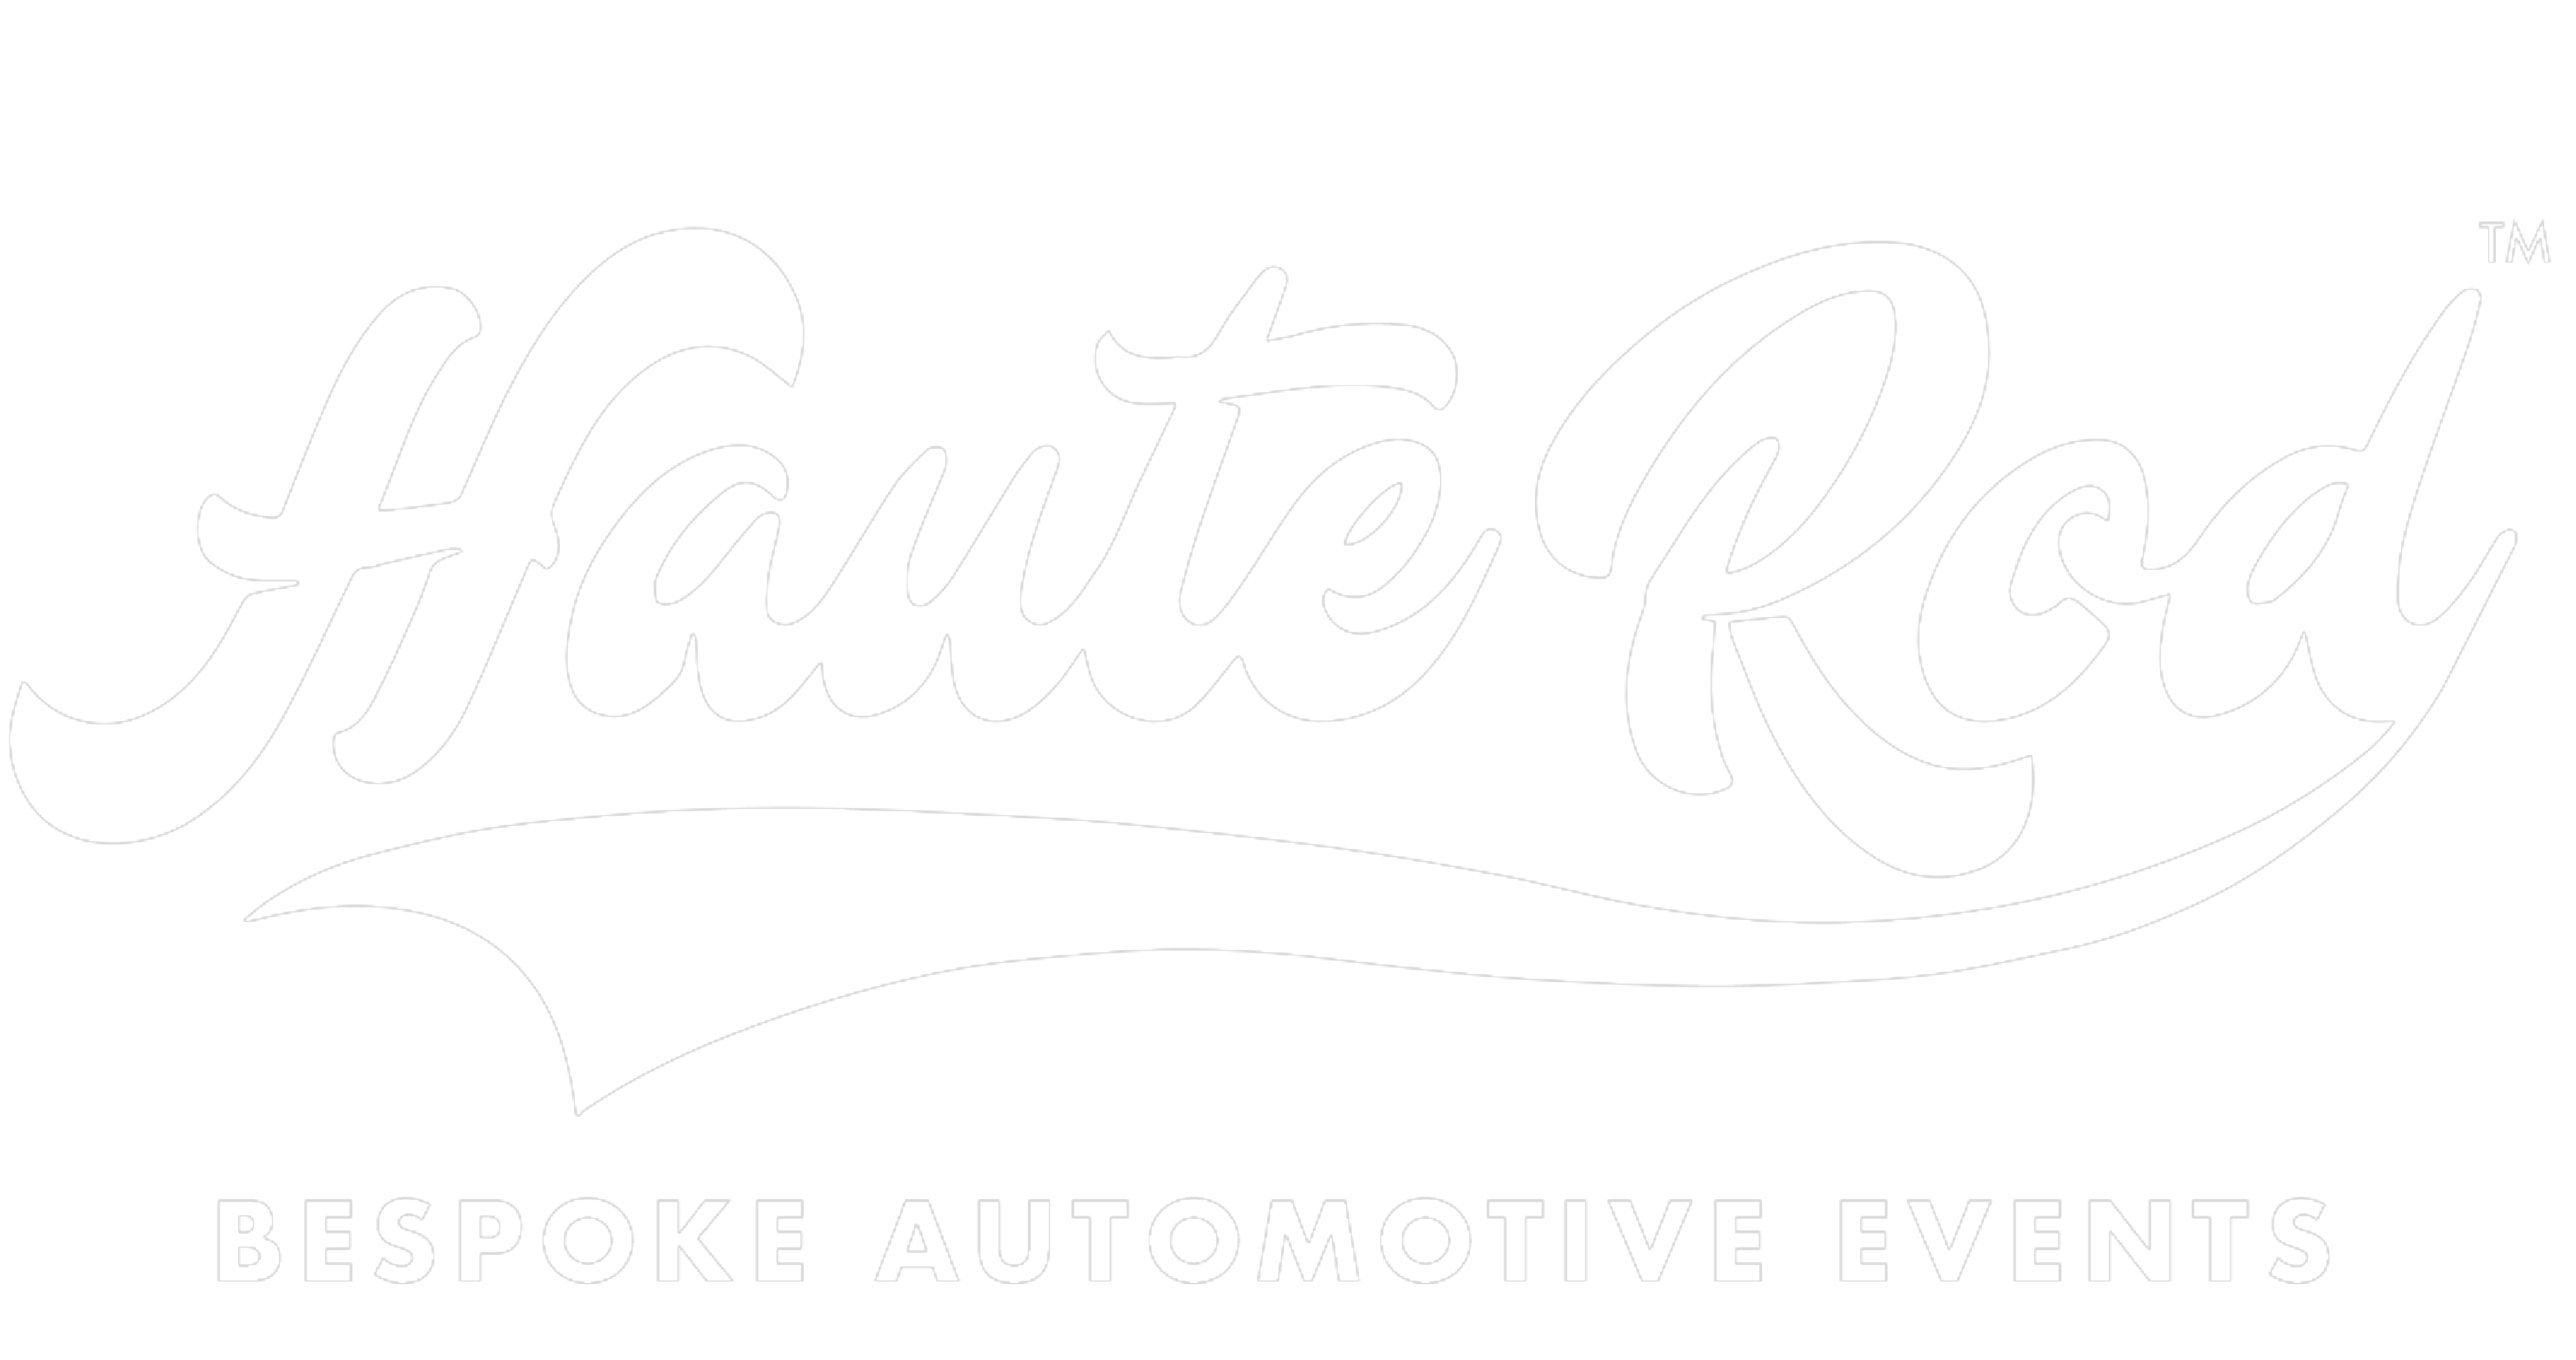 Introducing Haute Rod - Bespoke Automotive Events